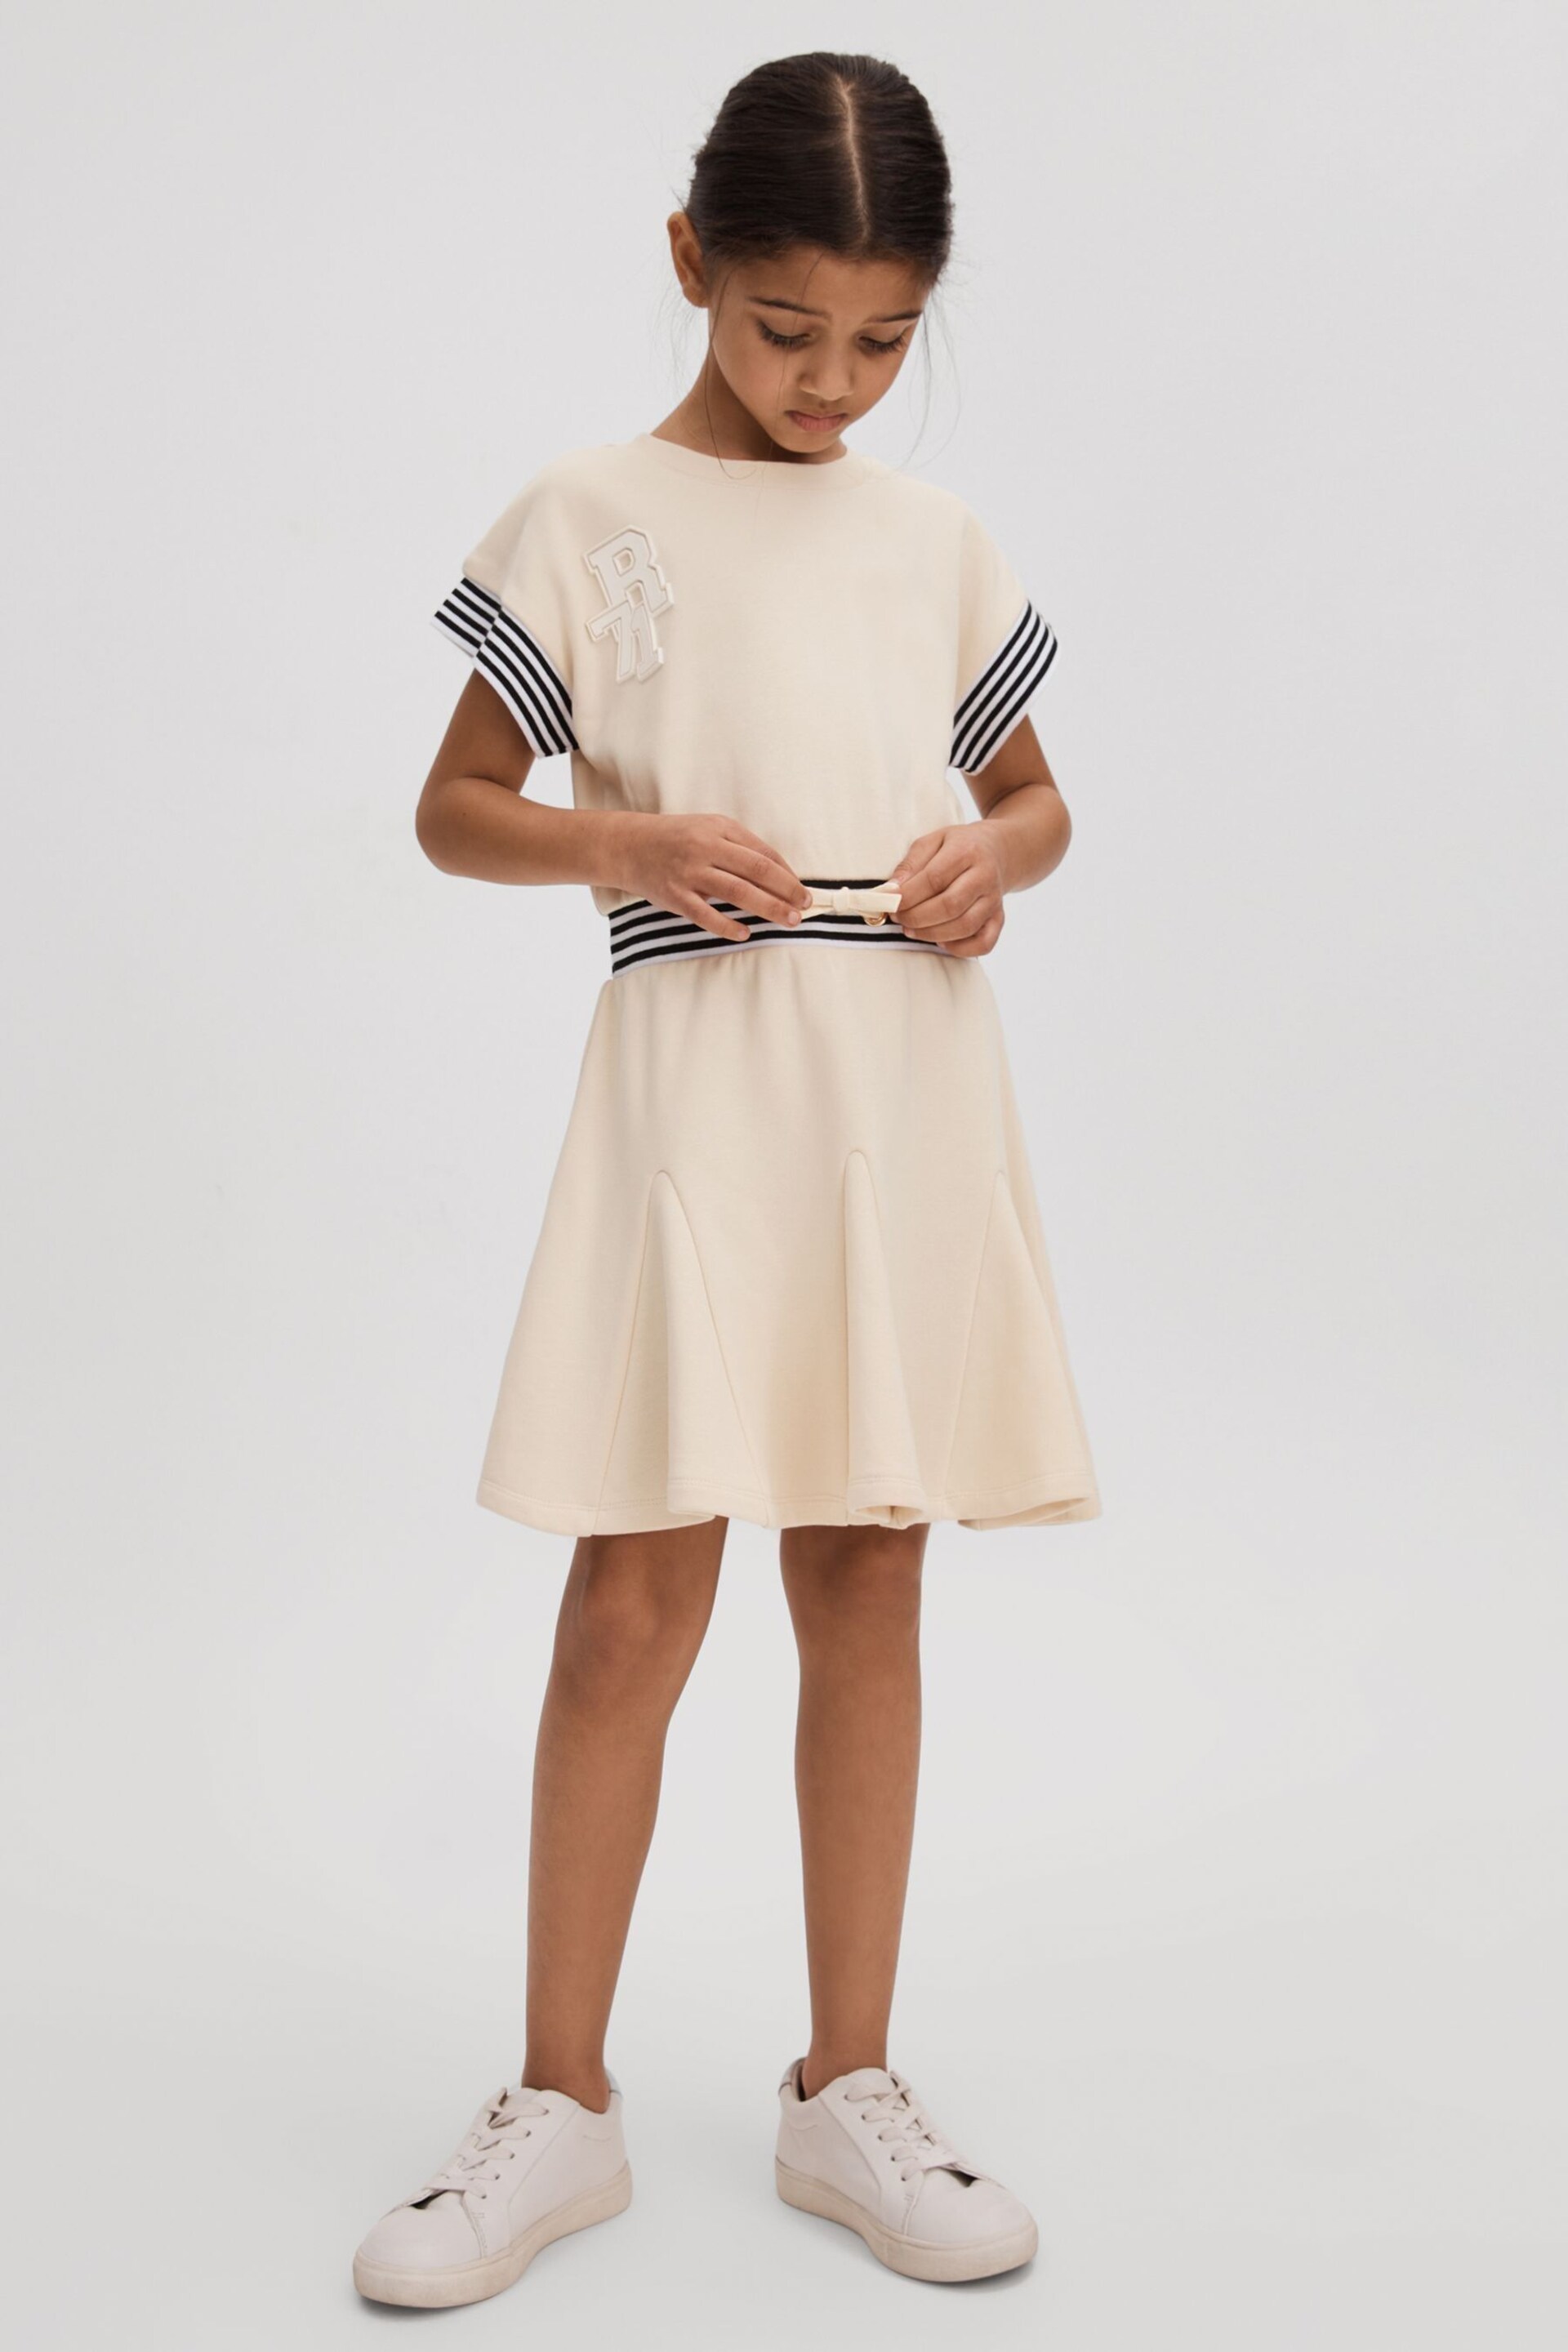 Reiss Ivory Milo Junior Cotton Blend Logo Dress - Image 1 of 4